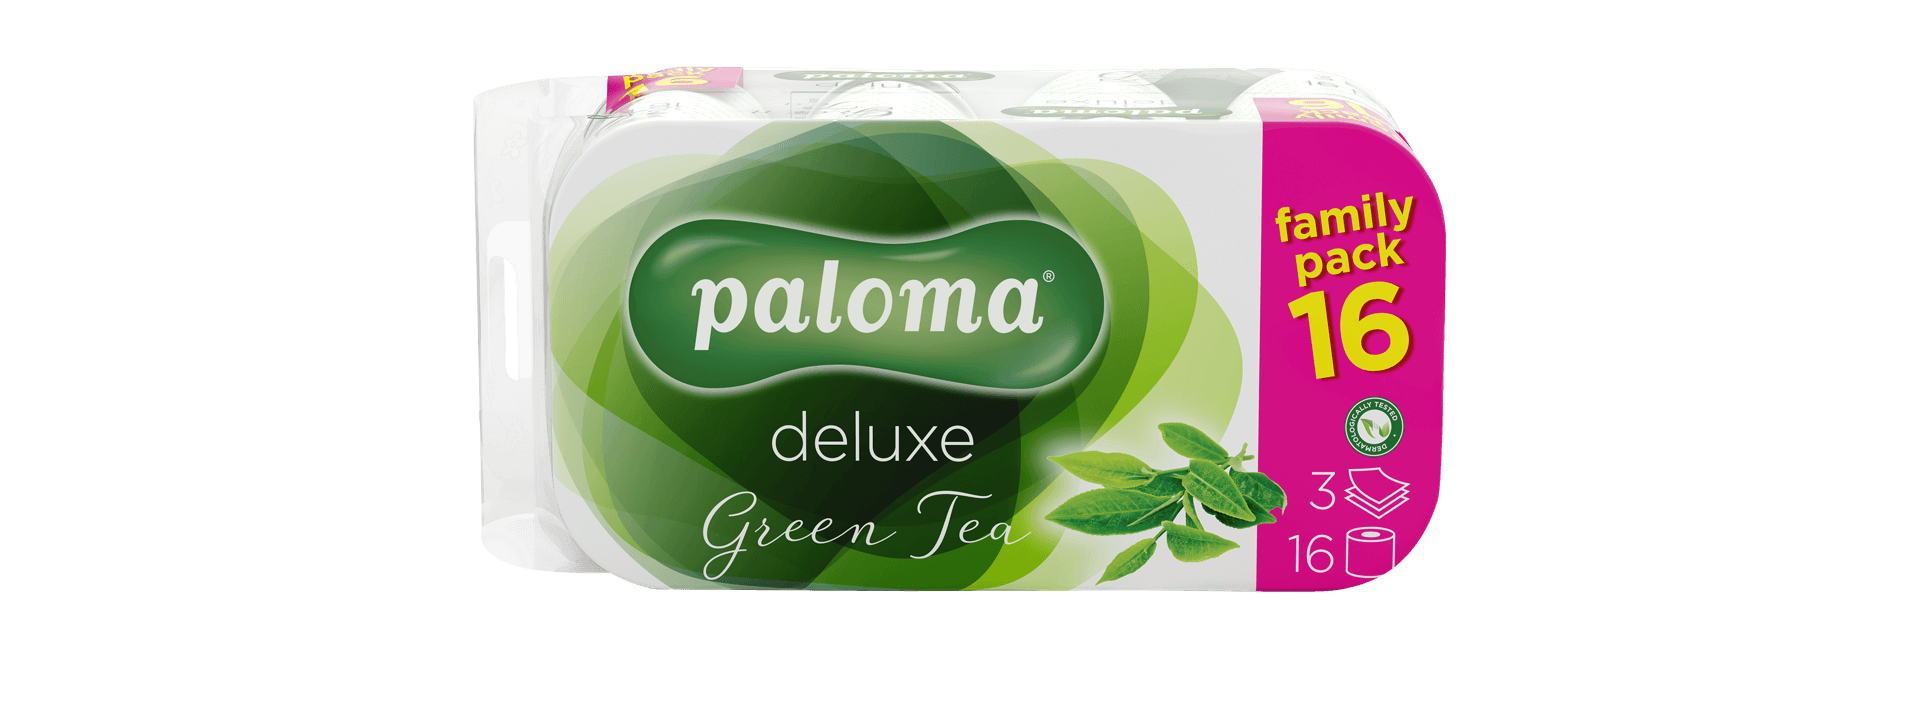 Paloma Deluxe Green Tea